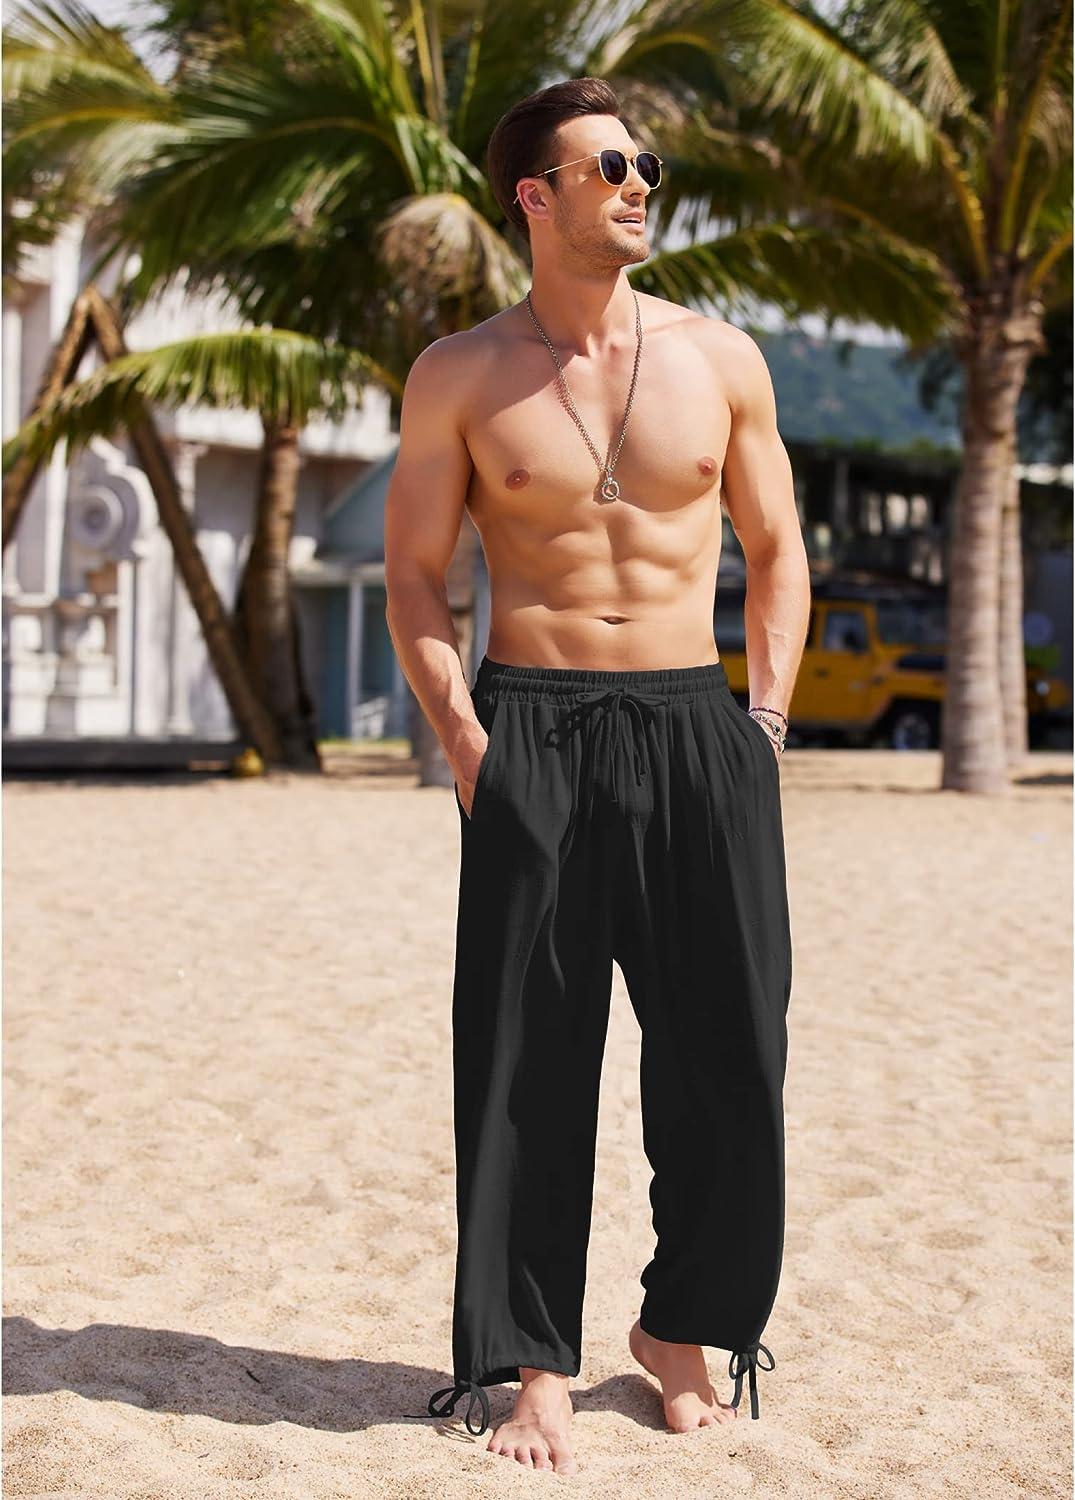 COOFANDY Men's Cotton Linen Pants Causal Drawstring Elastic Waist Harem  Pants Lightweight Bloomer Trousers Loose Yoga Pants Black : :  Clothing, Shoes & Accessories